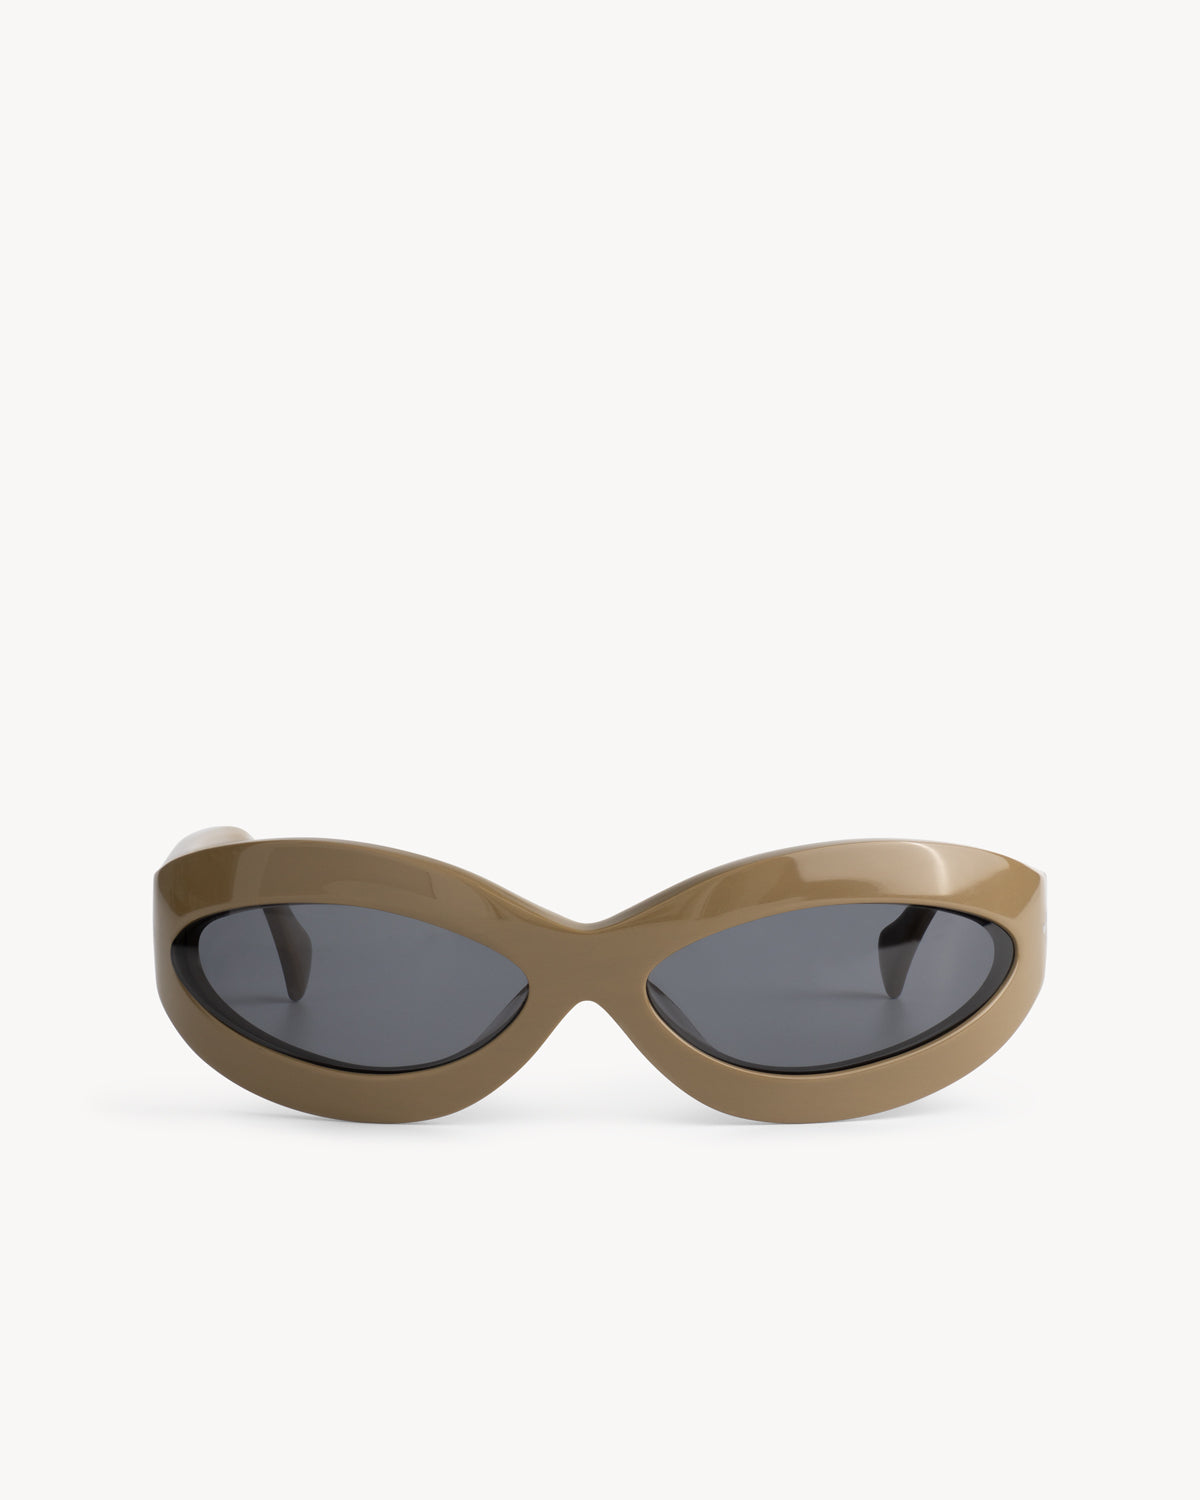 Port Tanger Summa Sunglasses in Zaytun Acetate and Black Lenses 1